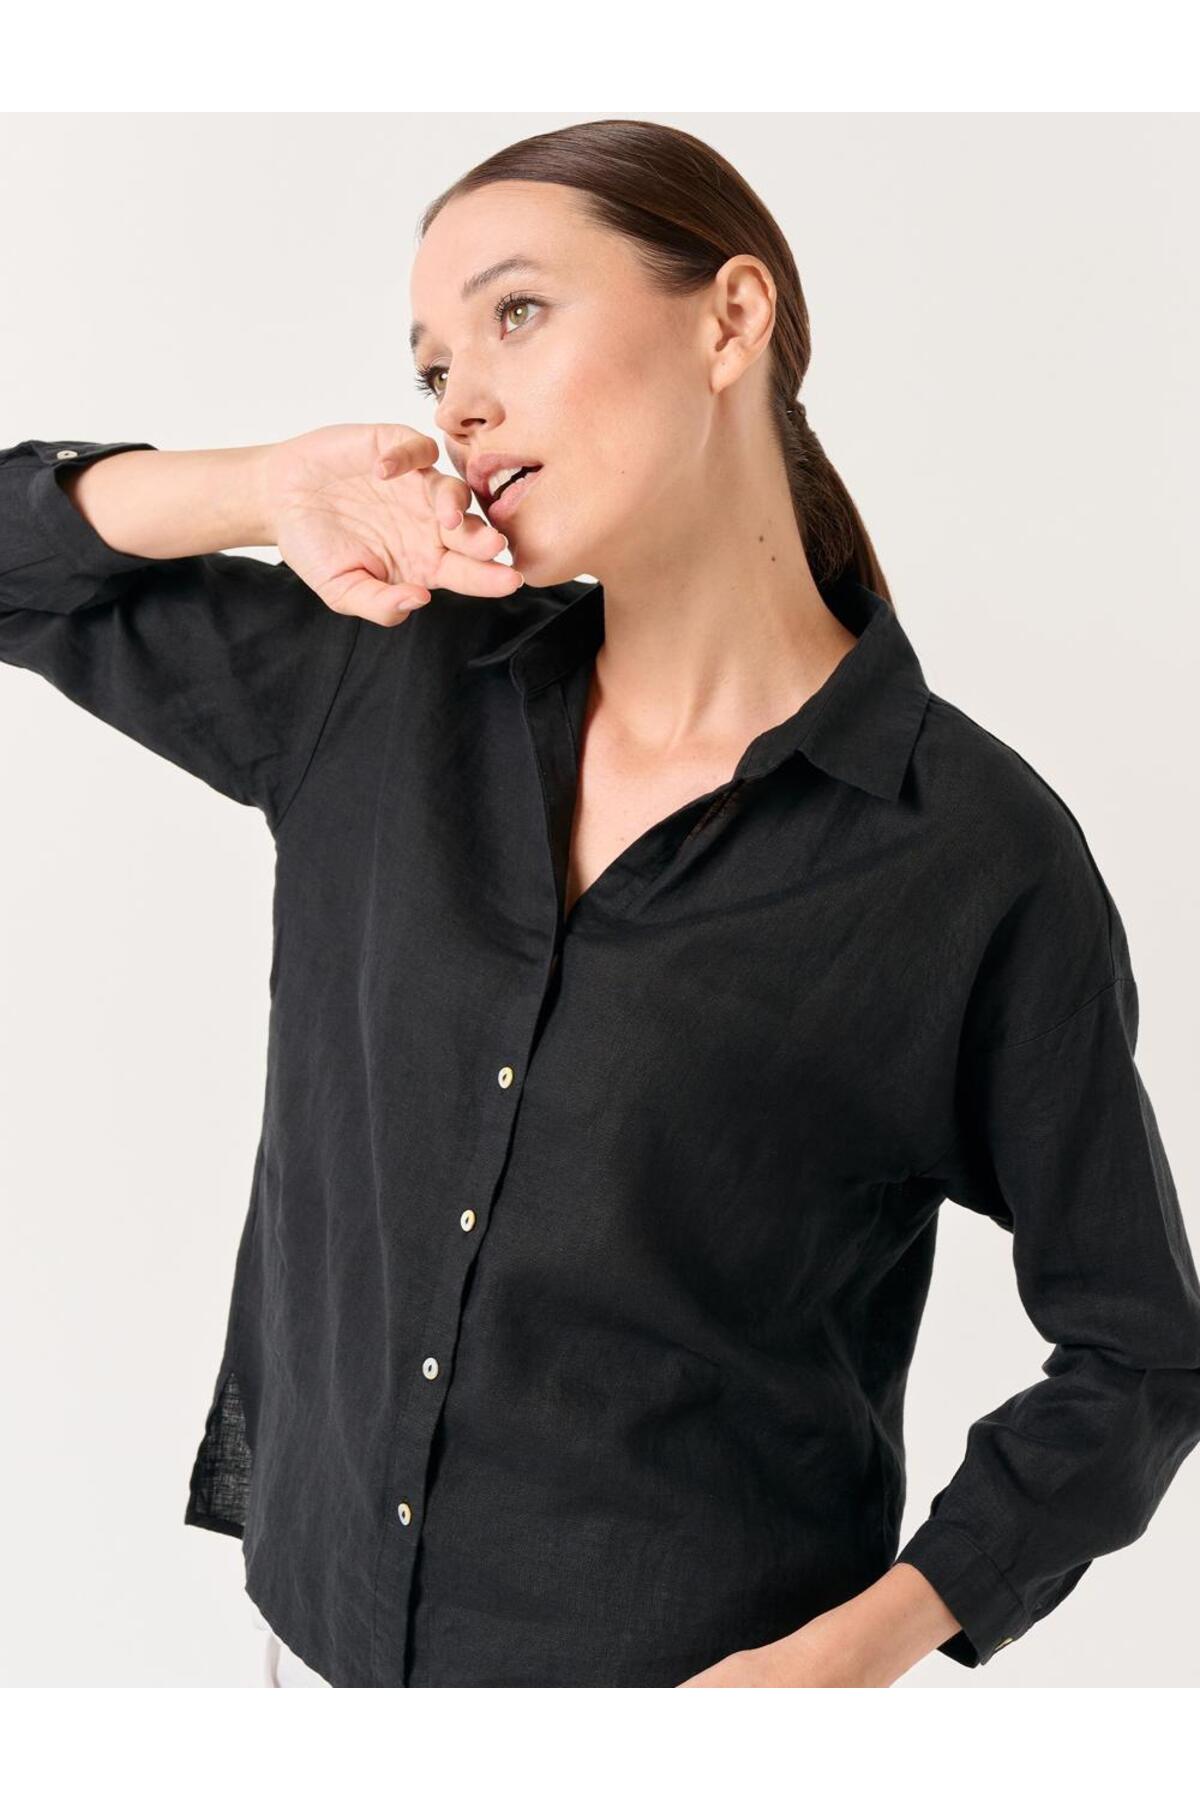 Jimmy Key Black Long Sleeve Woven Linen Shirt